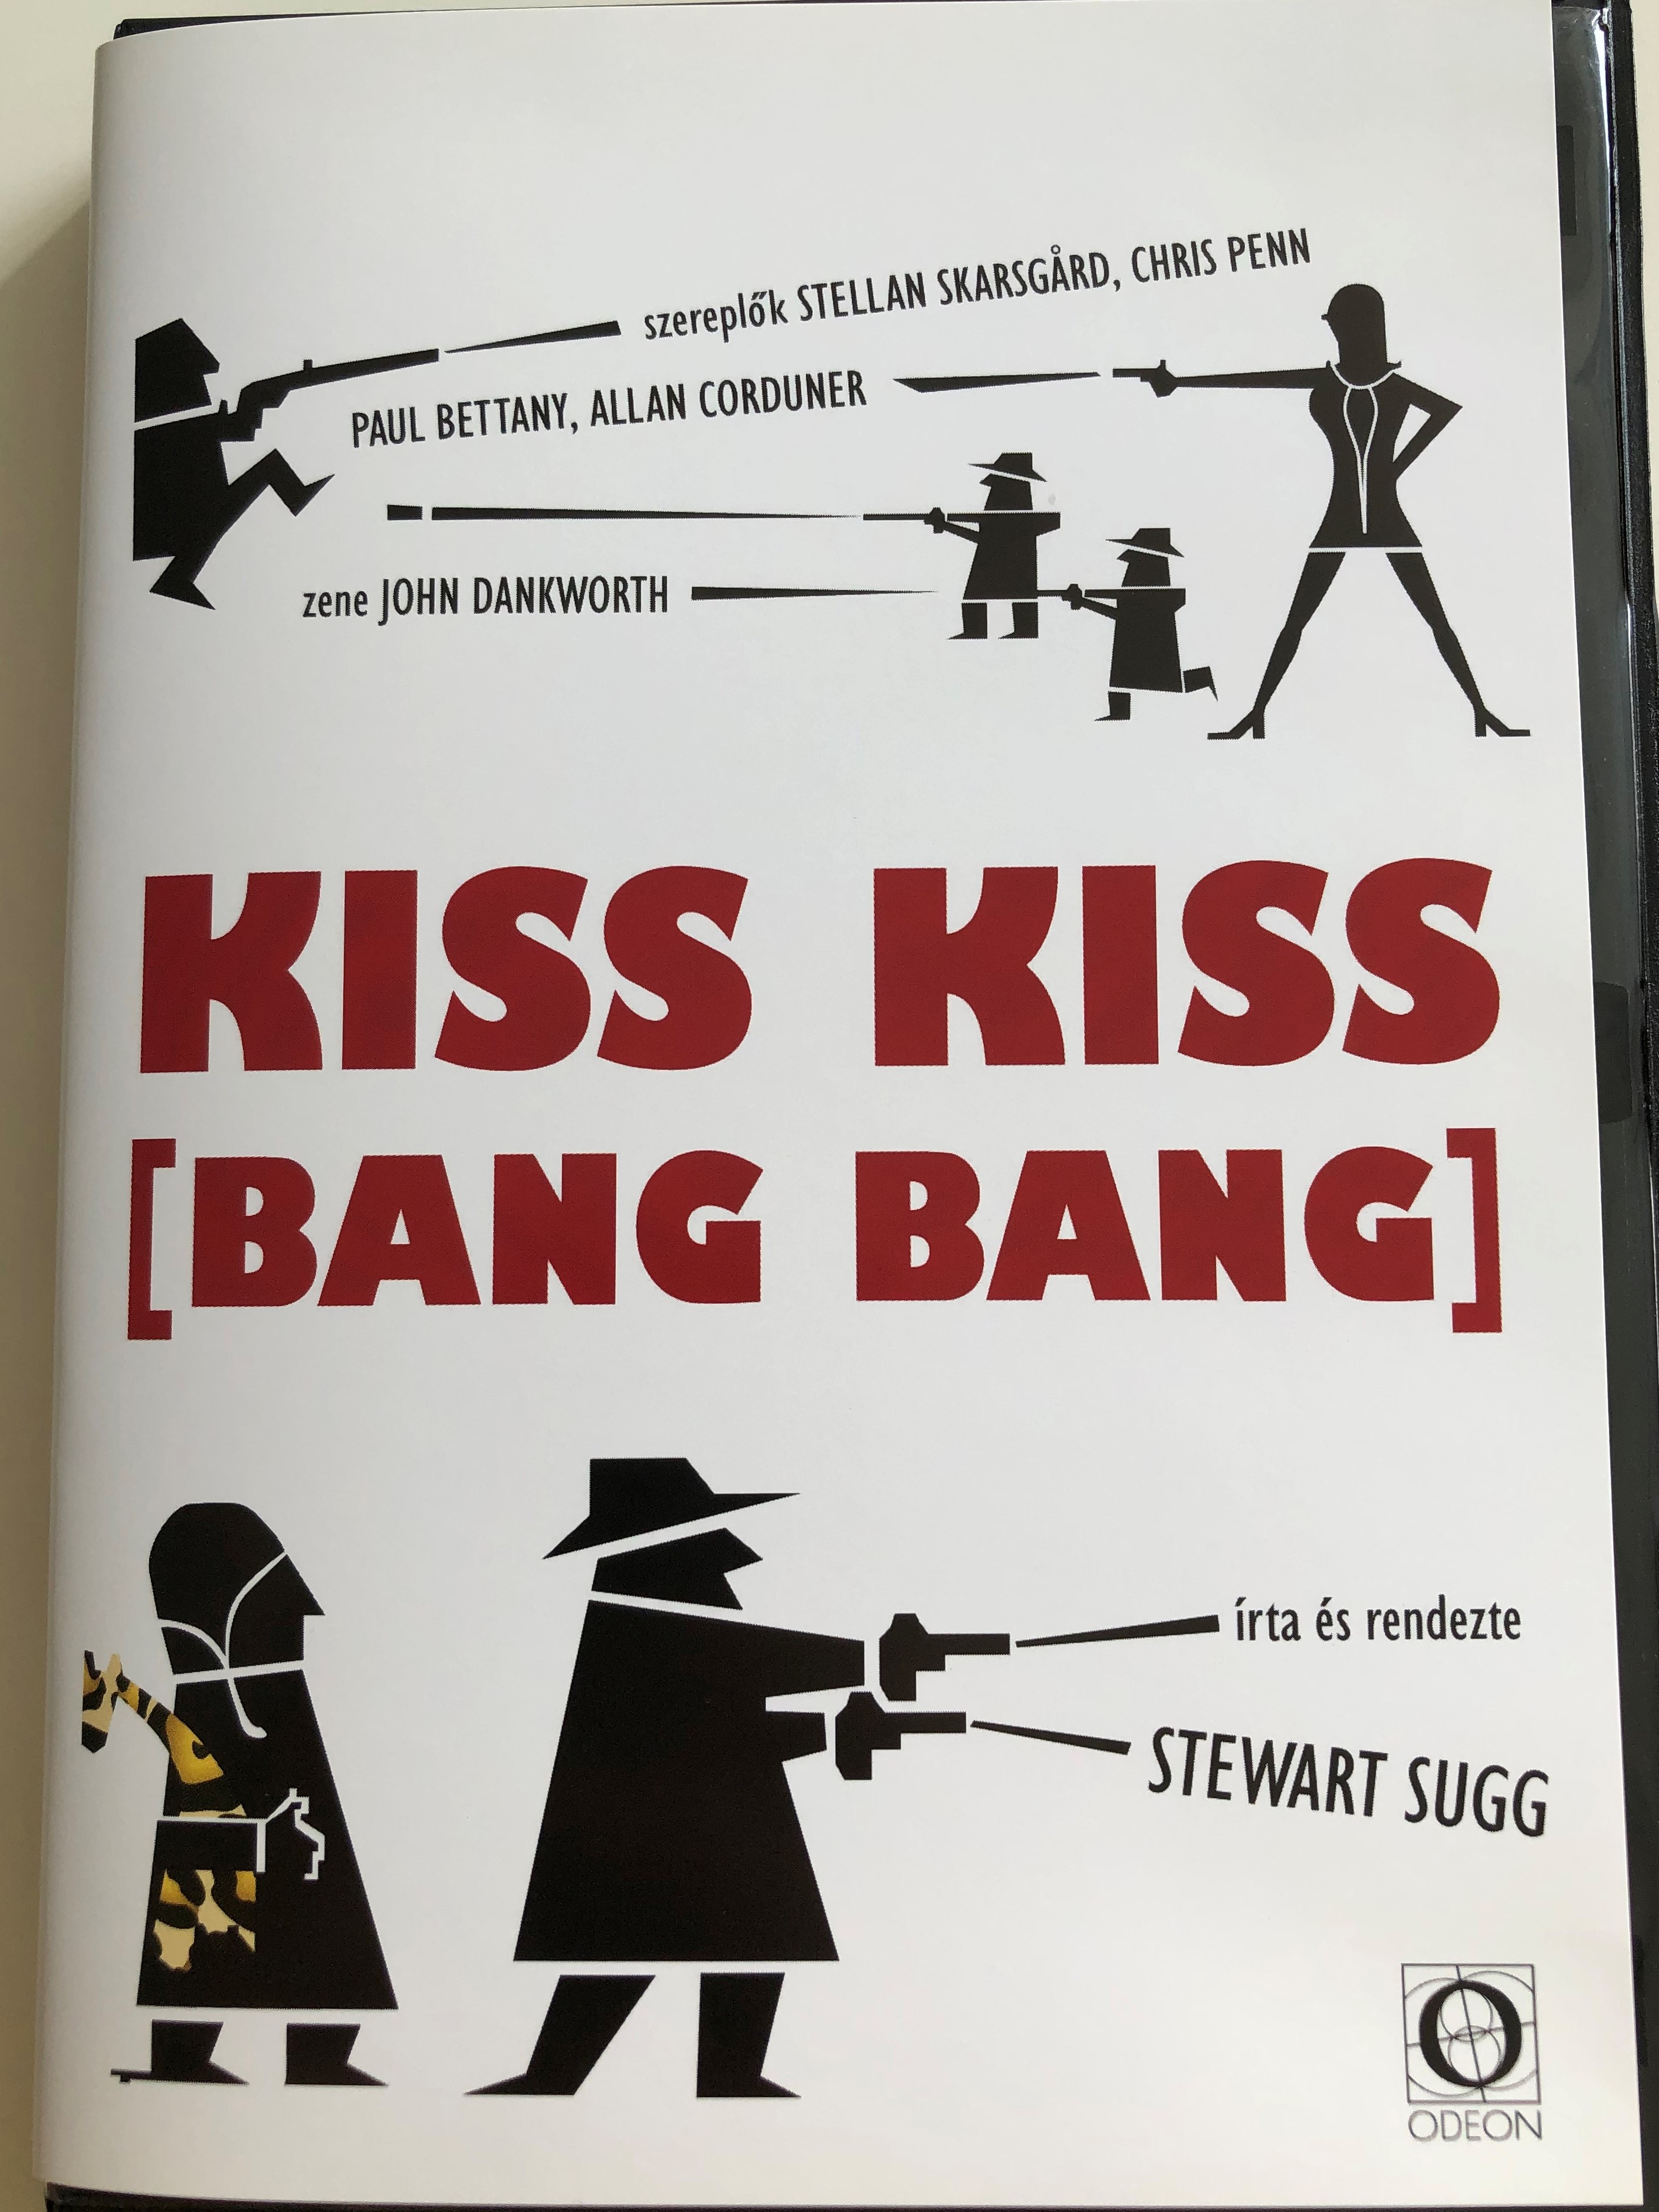 kiss-kiss-bang-bang-dvd-2000-directed-by-stewart-sugg-starring-stellan-skarsgard-chris-penn-paul-bettany-allan-corduner-music-john-dankworth-1-.jpg